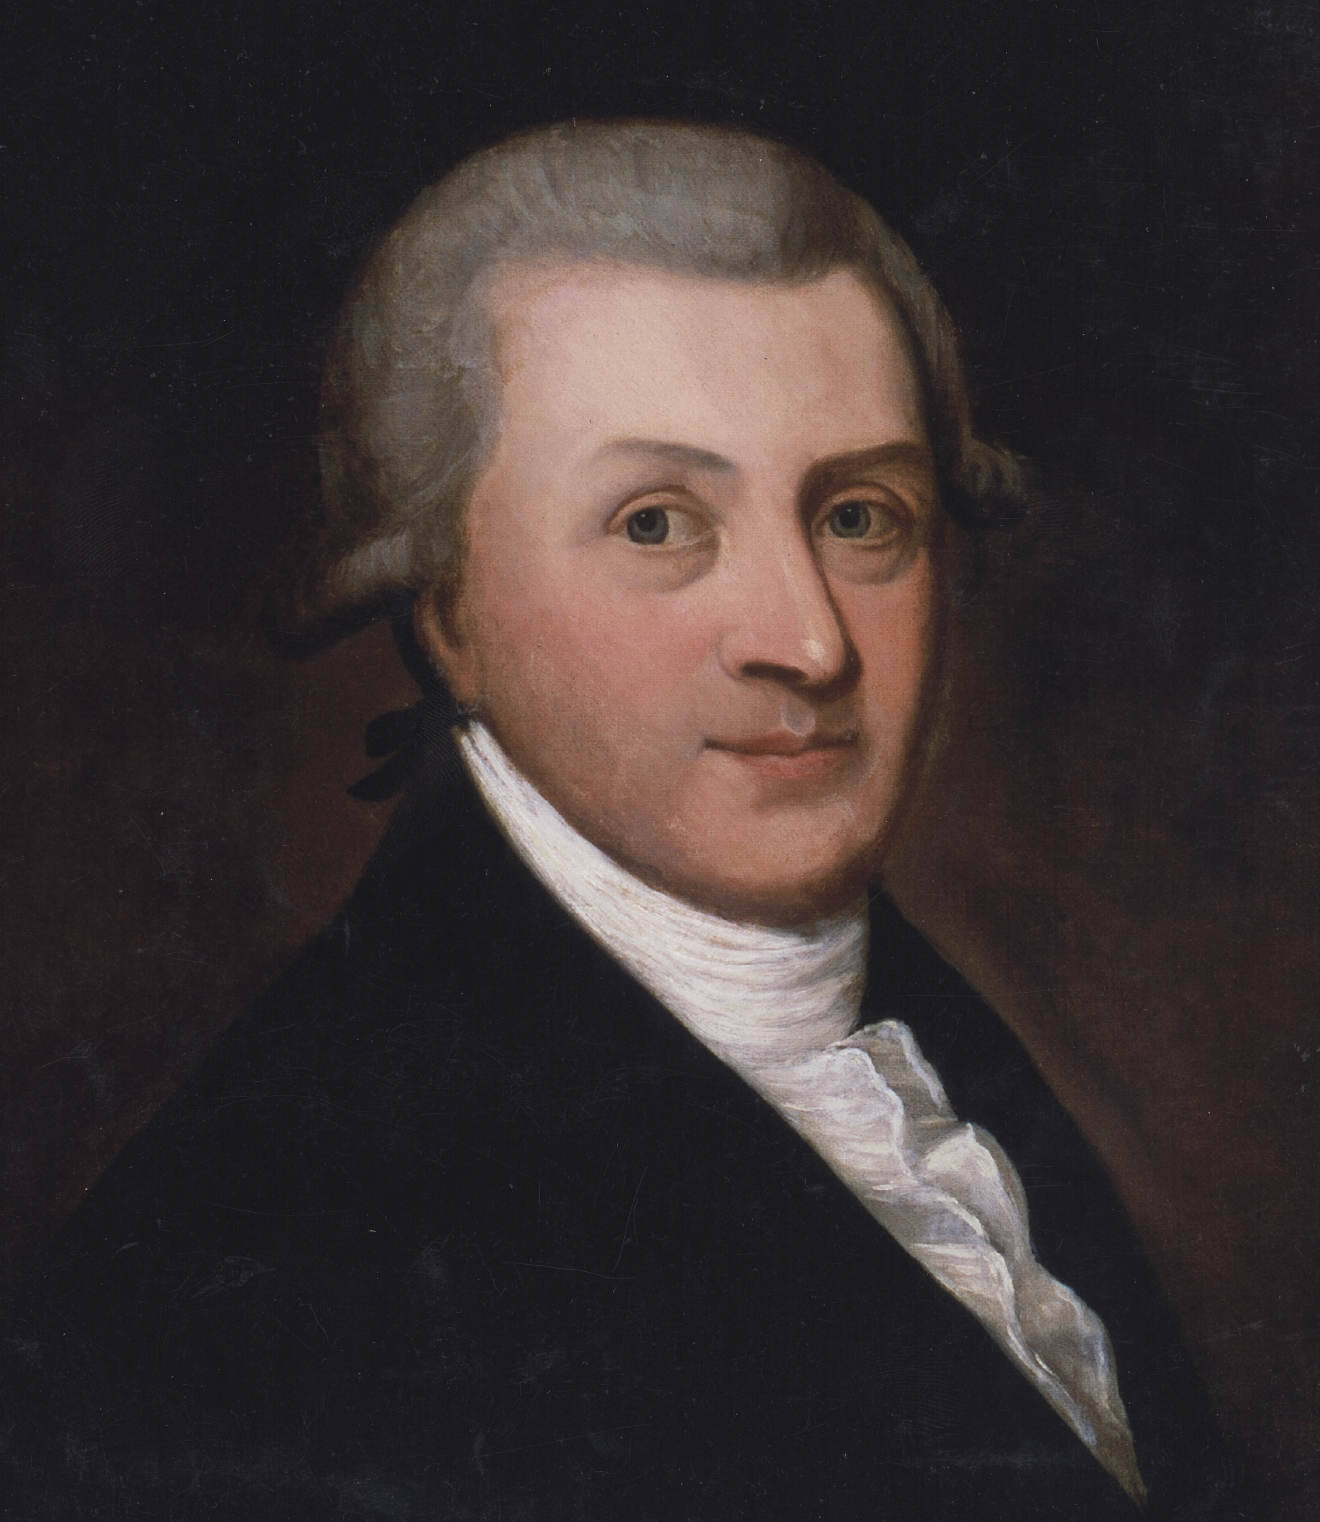 Portrait of Arthur Guinness (1725-1803), the founder of Guinness dated 1759.